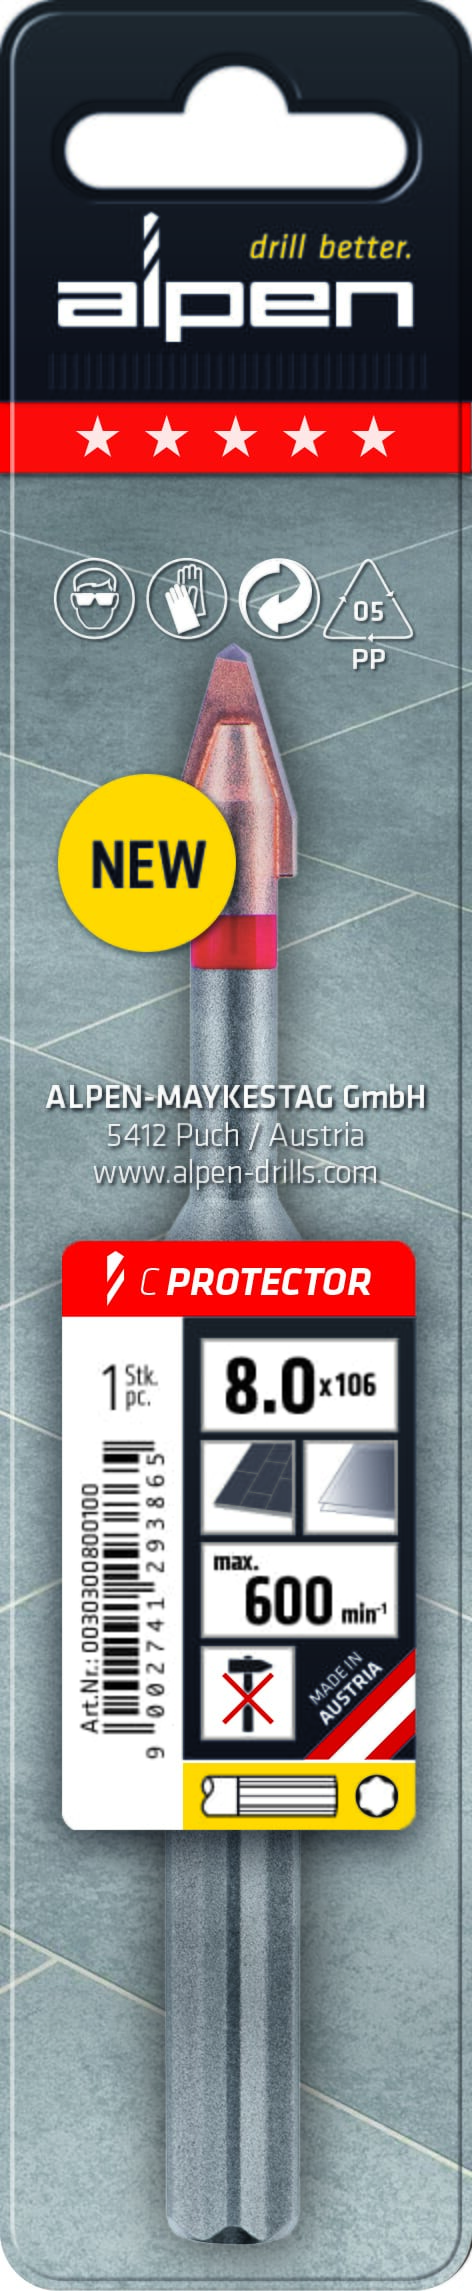 Alpen Series 303 C Protector Drill 8Mm